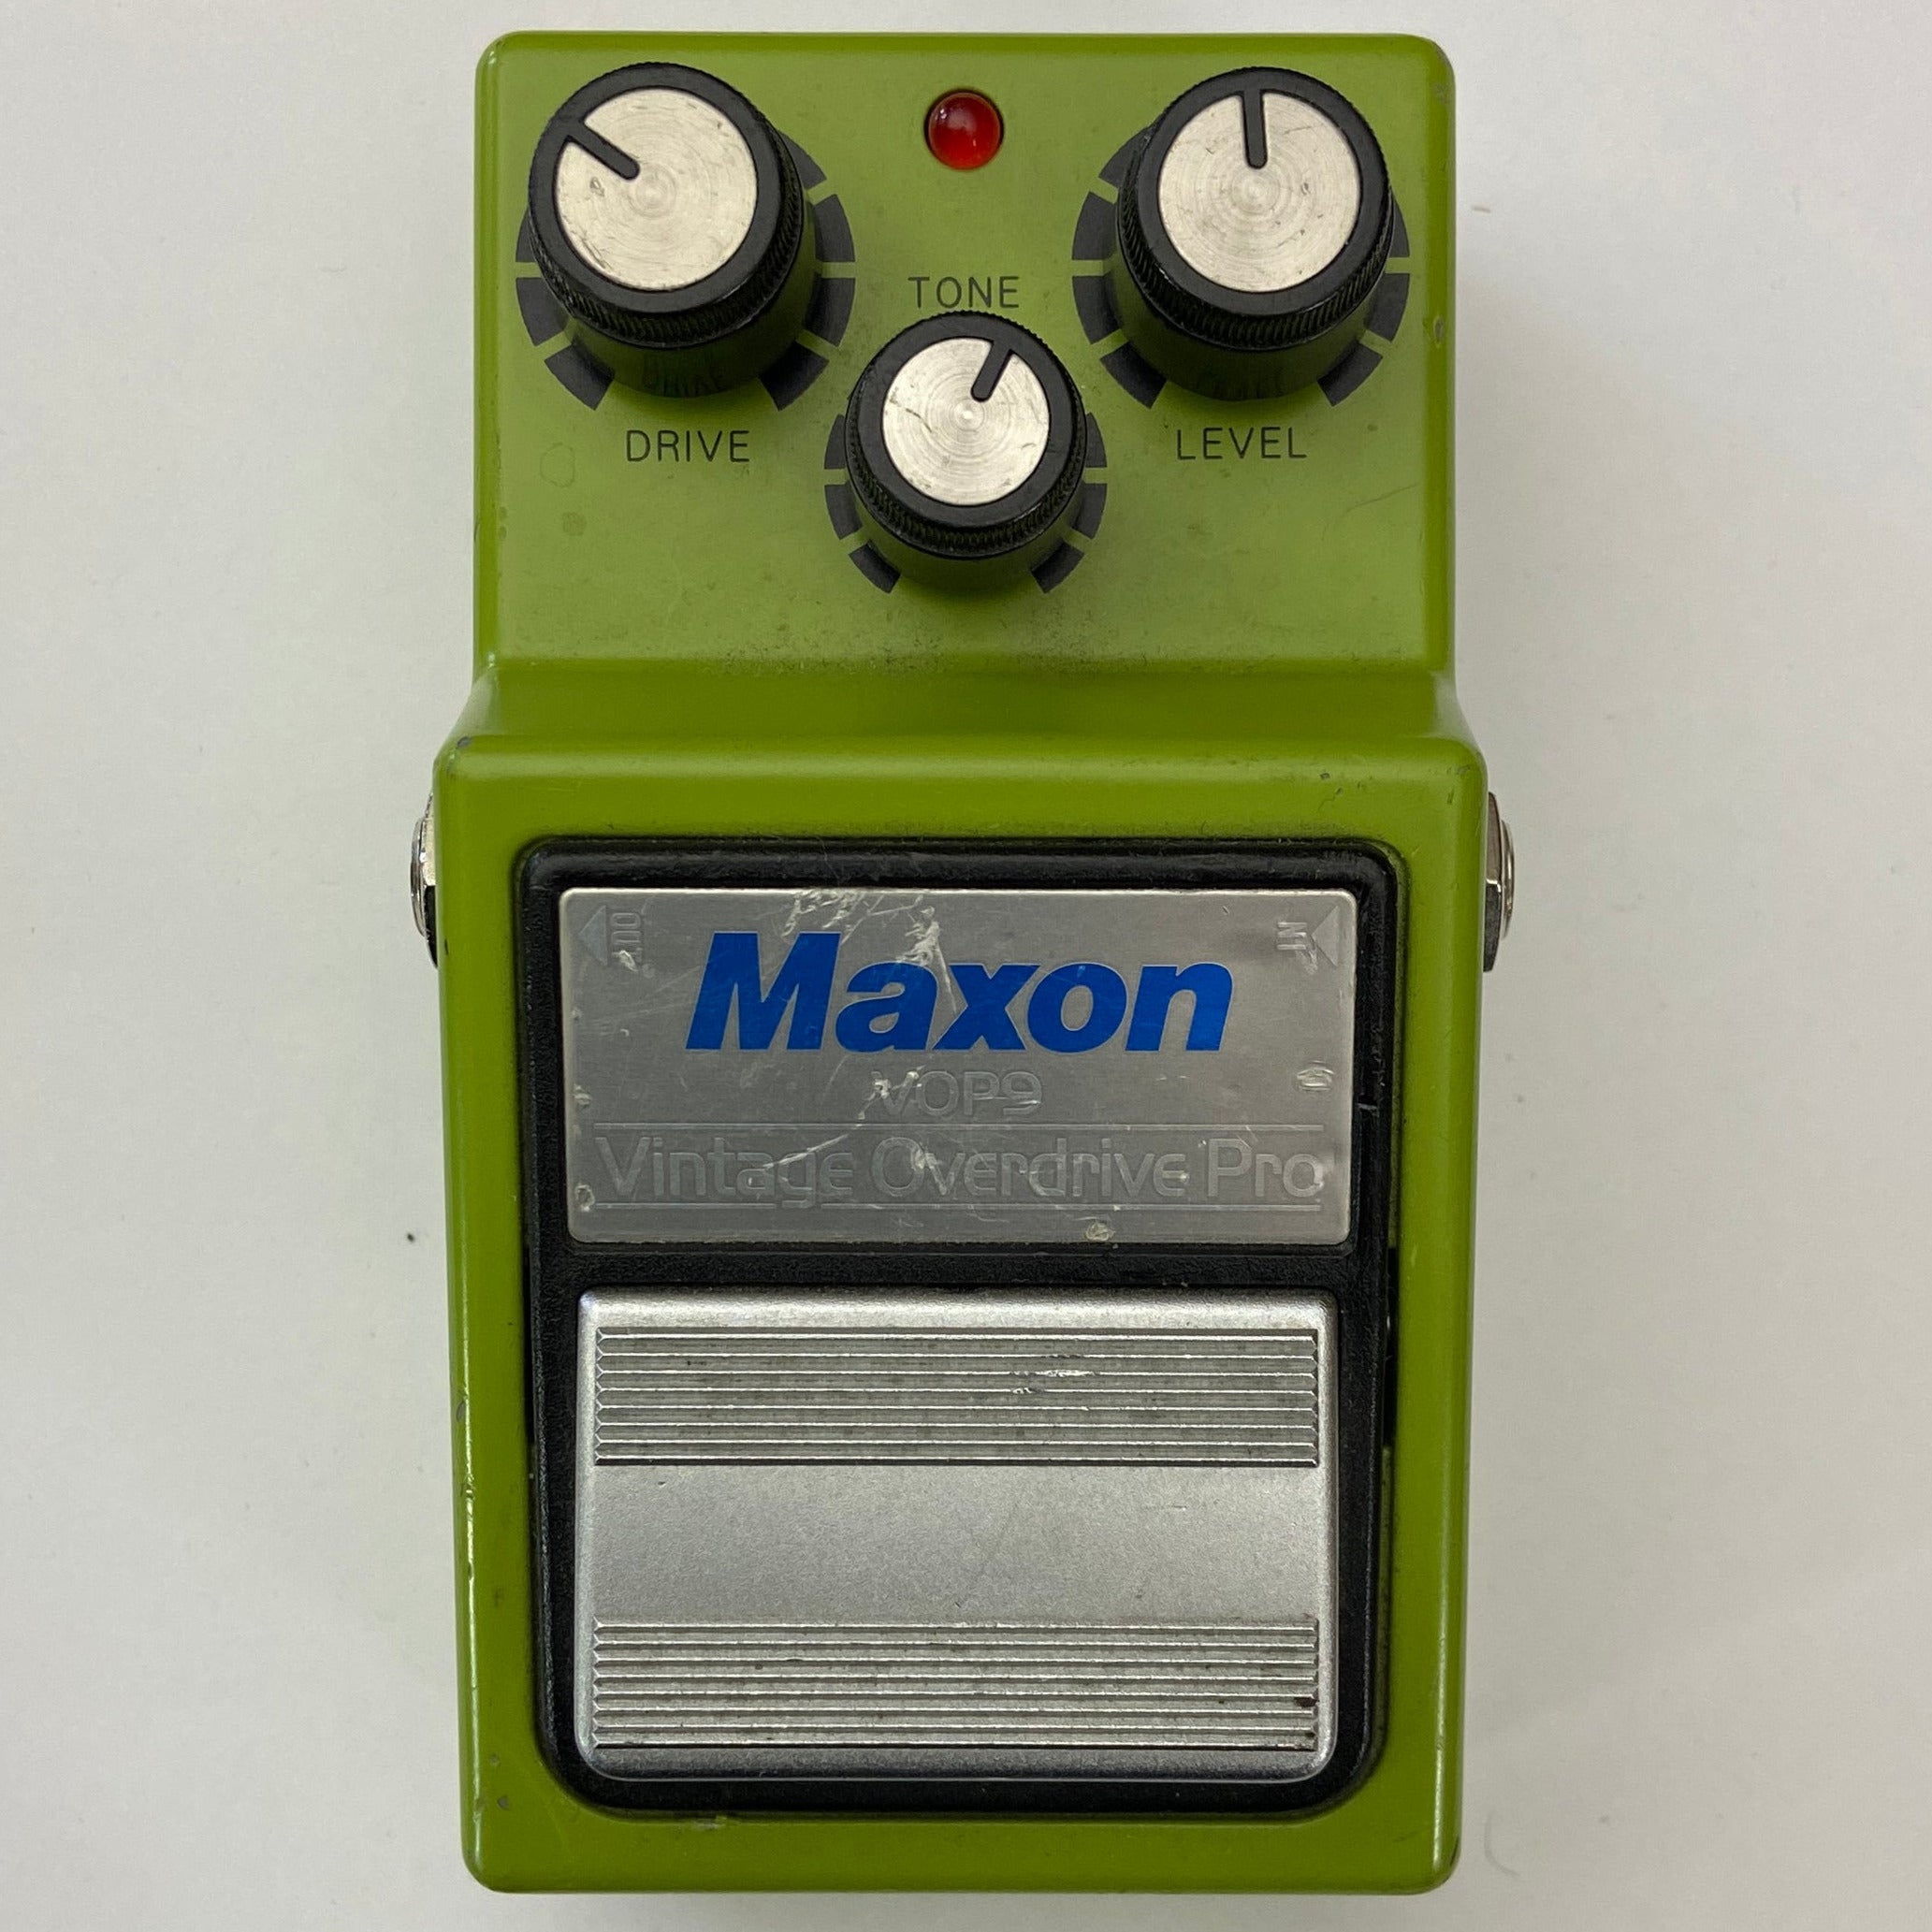 MAXON VOP-9 Vintage Overdrive Pro , (B-STOCK)